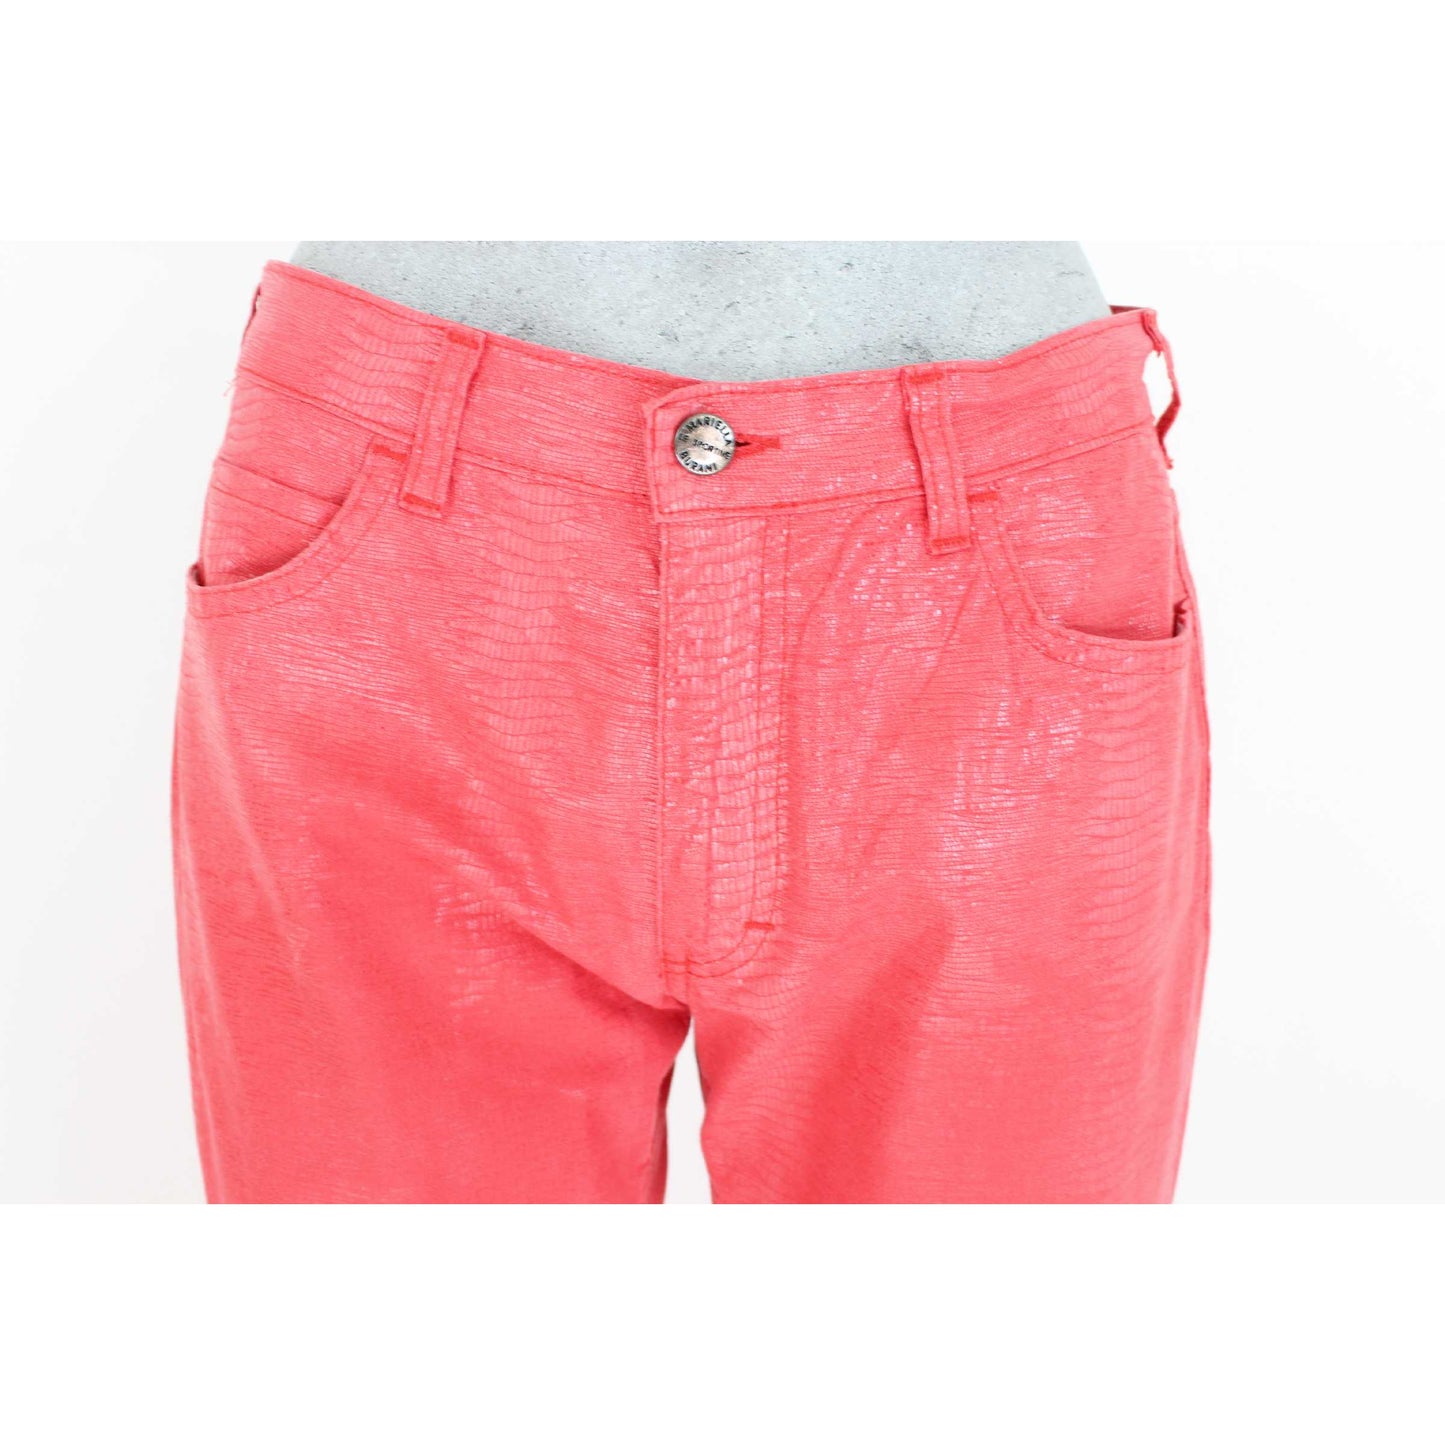 Mariella Burani Vintage Cotton Pink Pants